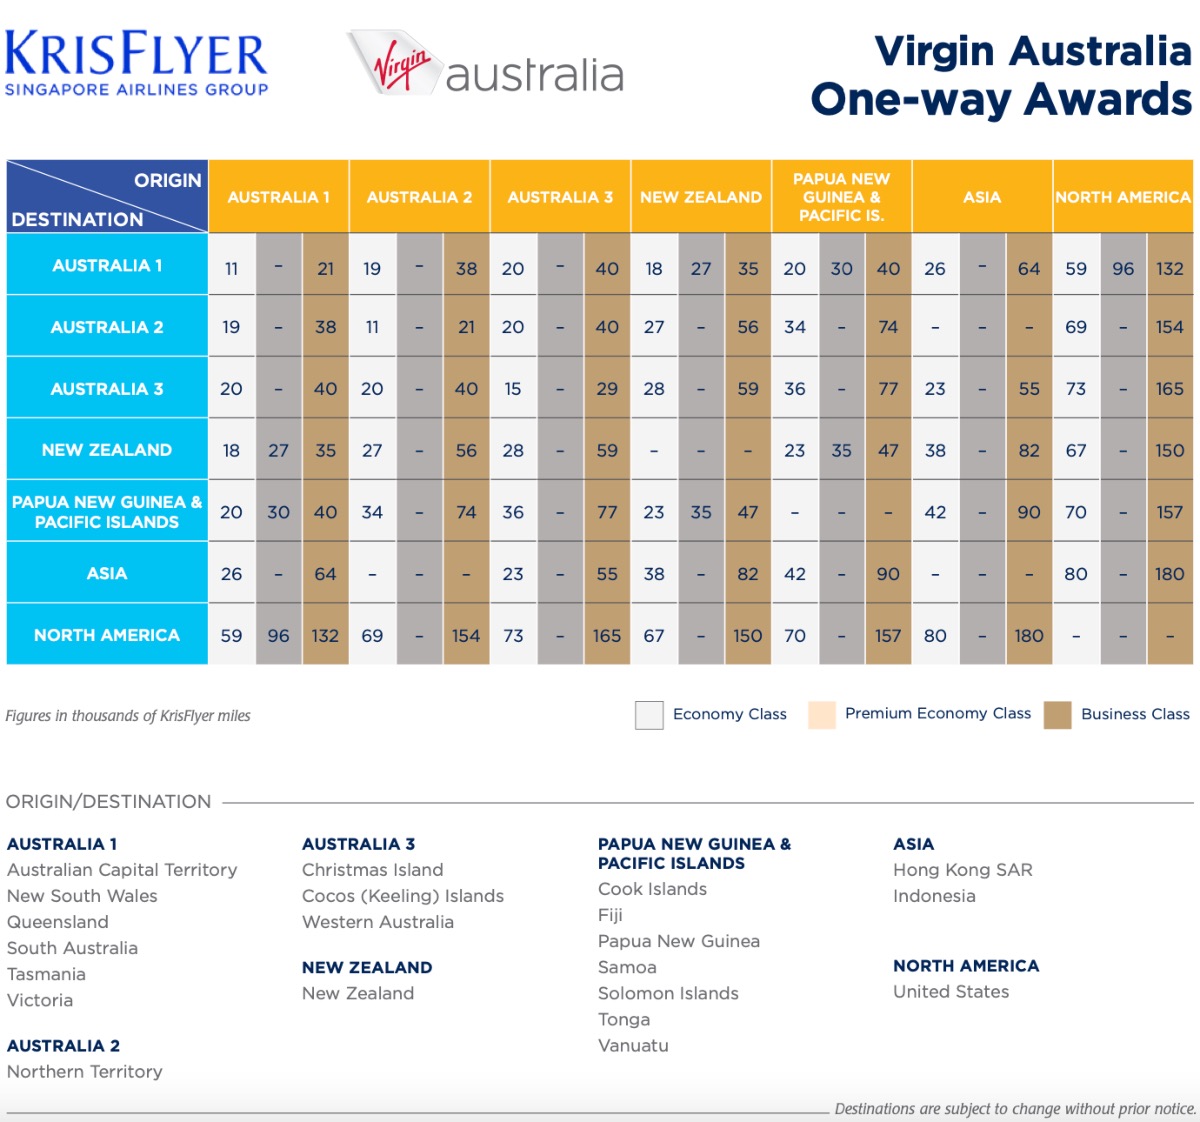 KrisFlyer's Virgin Australia award chart until 31 July 2022